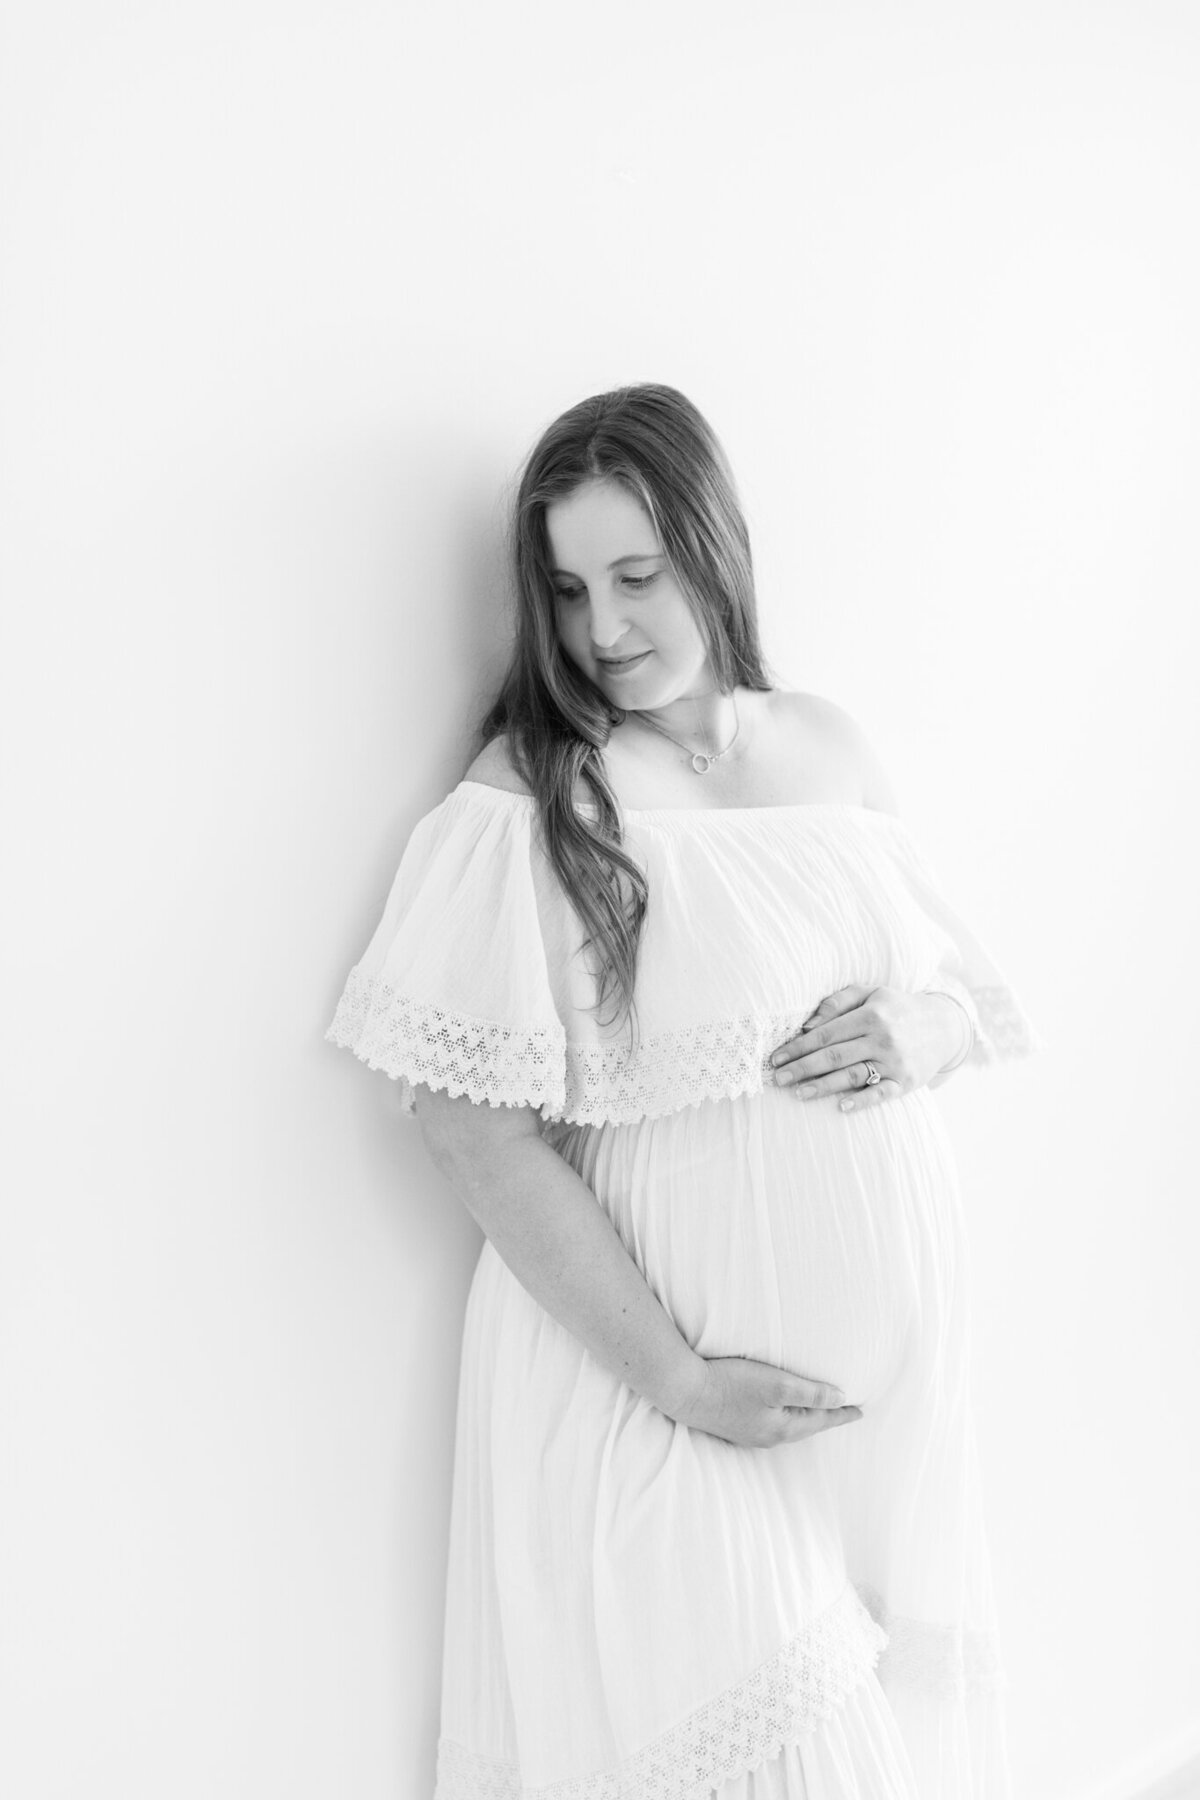 Alyce-Holzy-Maternity-10